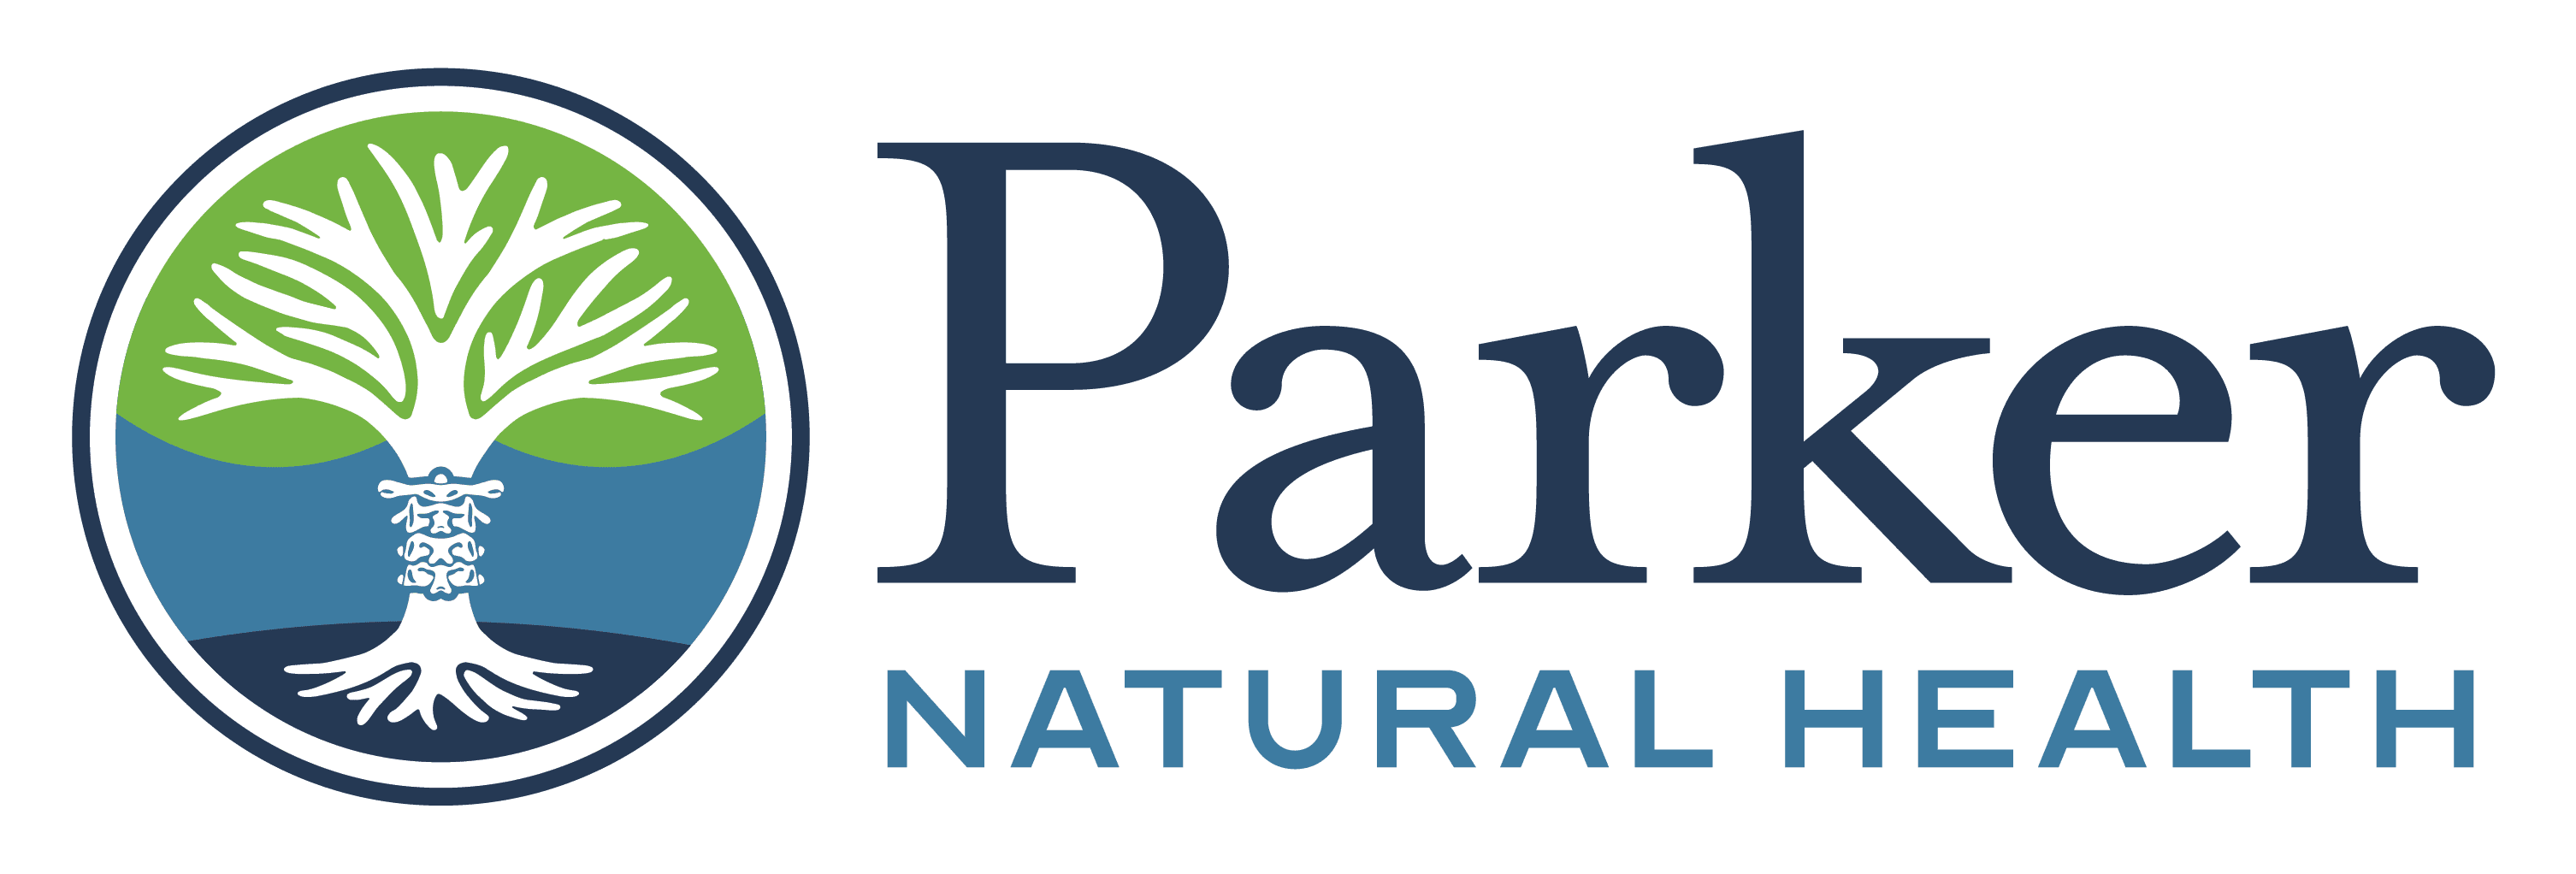 parker_natural_health-color-horizontal